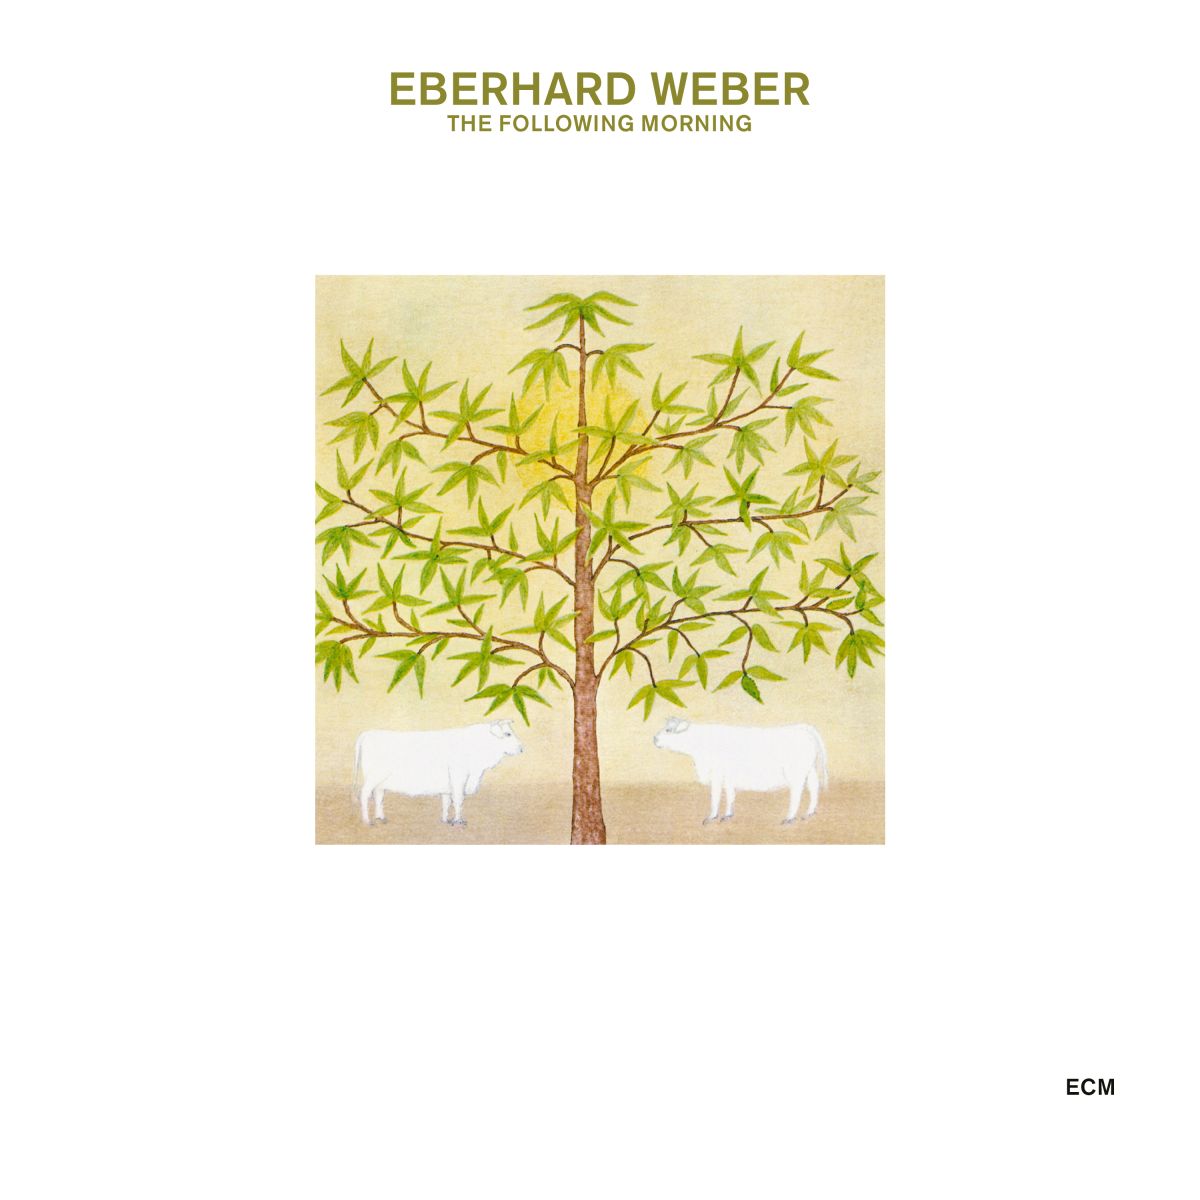 EBERHARD WEBER